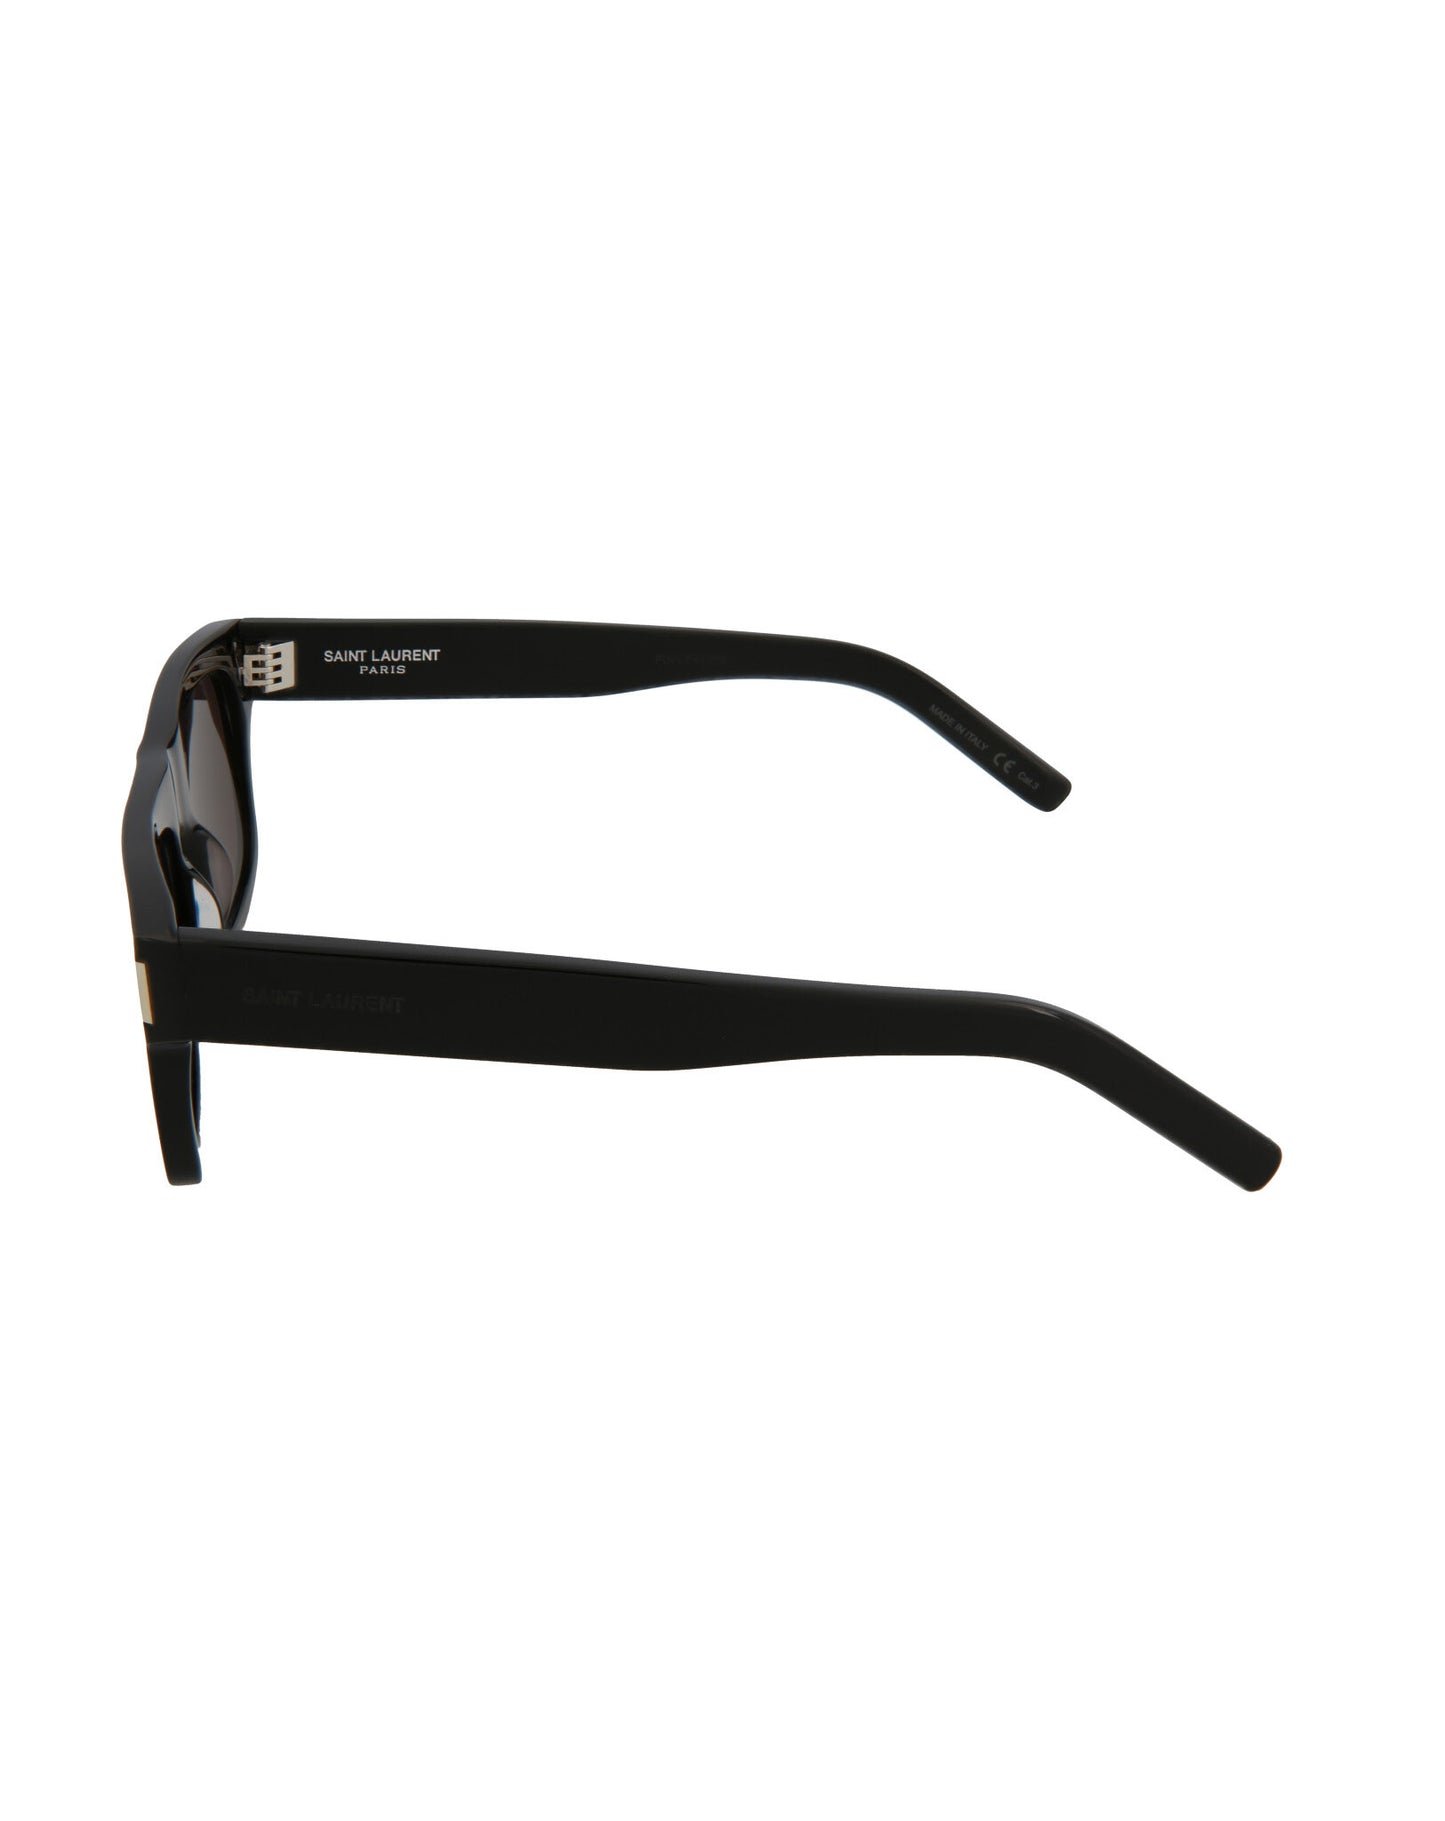 Saint Laurent Fashion Sunglasses Black Black Grey